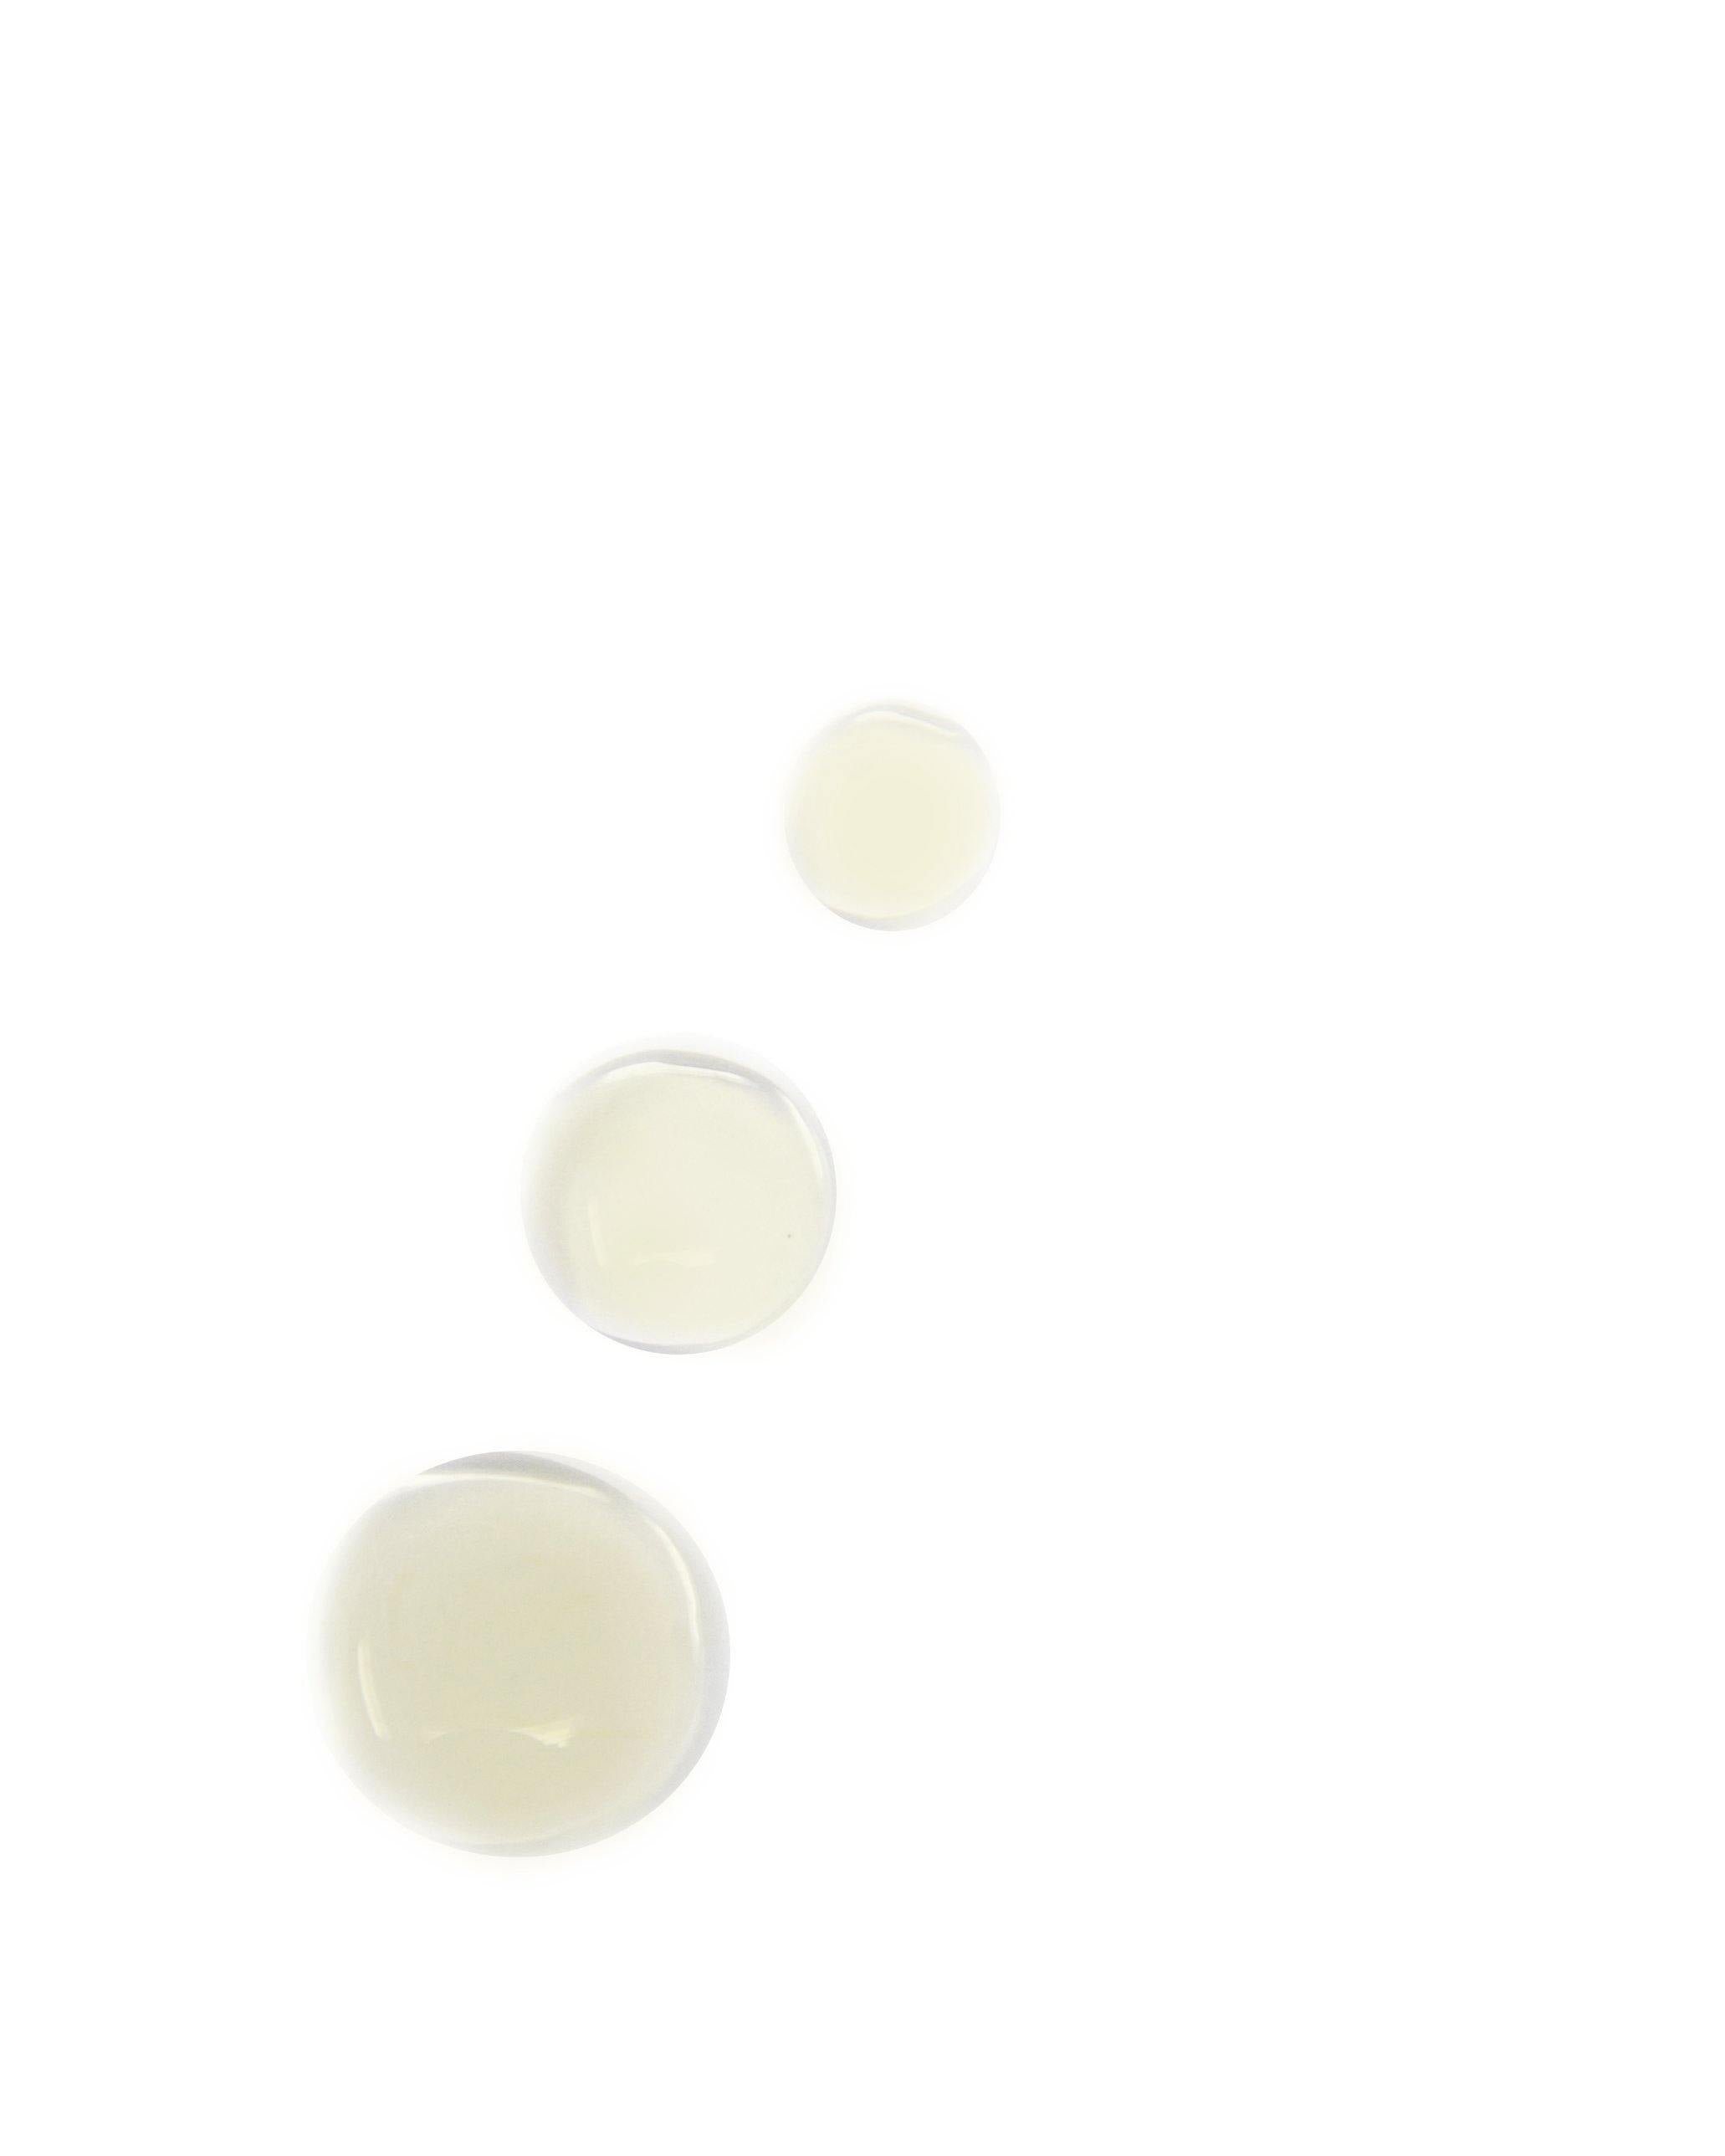 Restorsea 24Kt Liquid Gold Face Oil | Emerage Cosmetics | Moisturizers